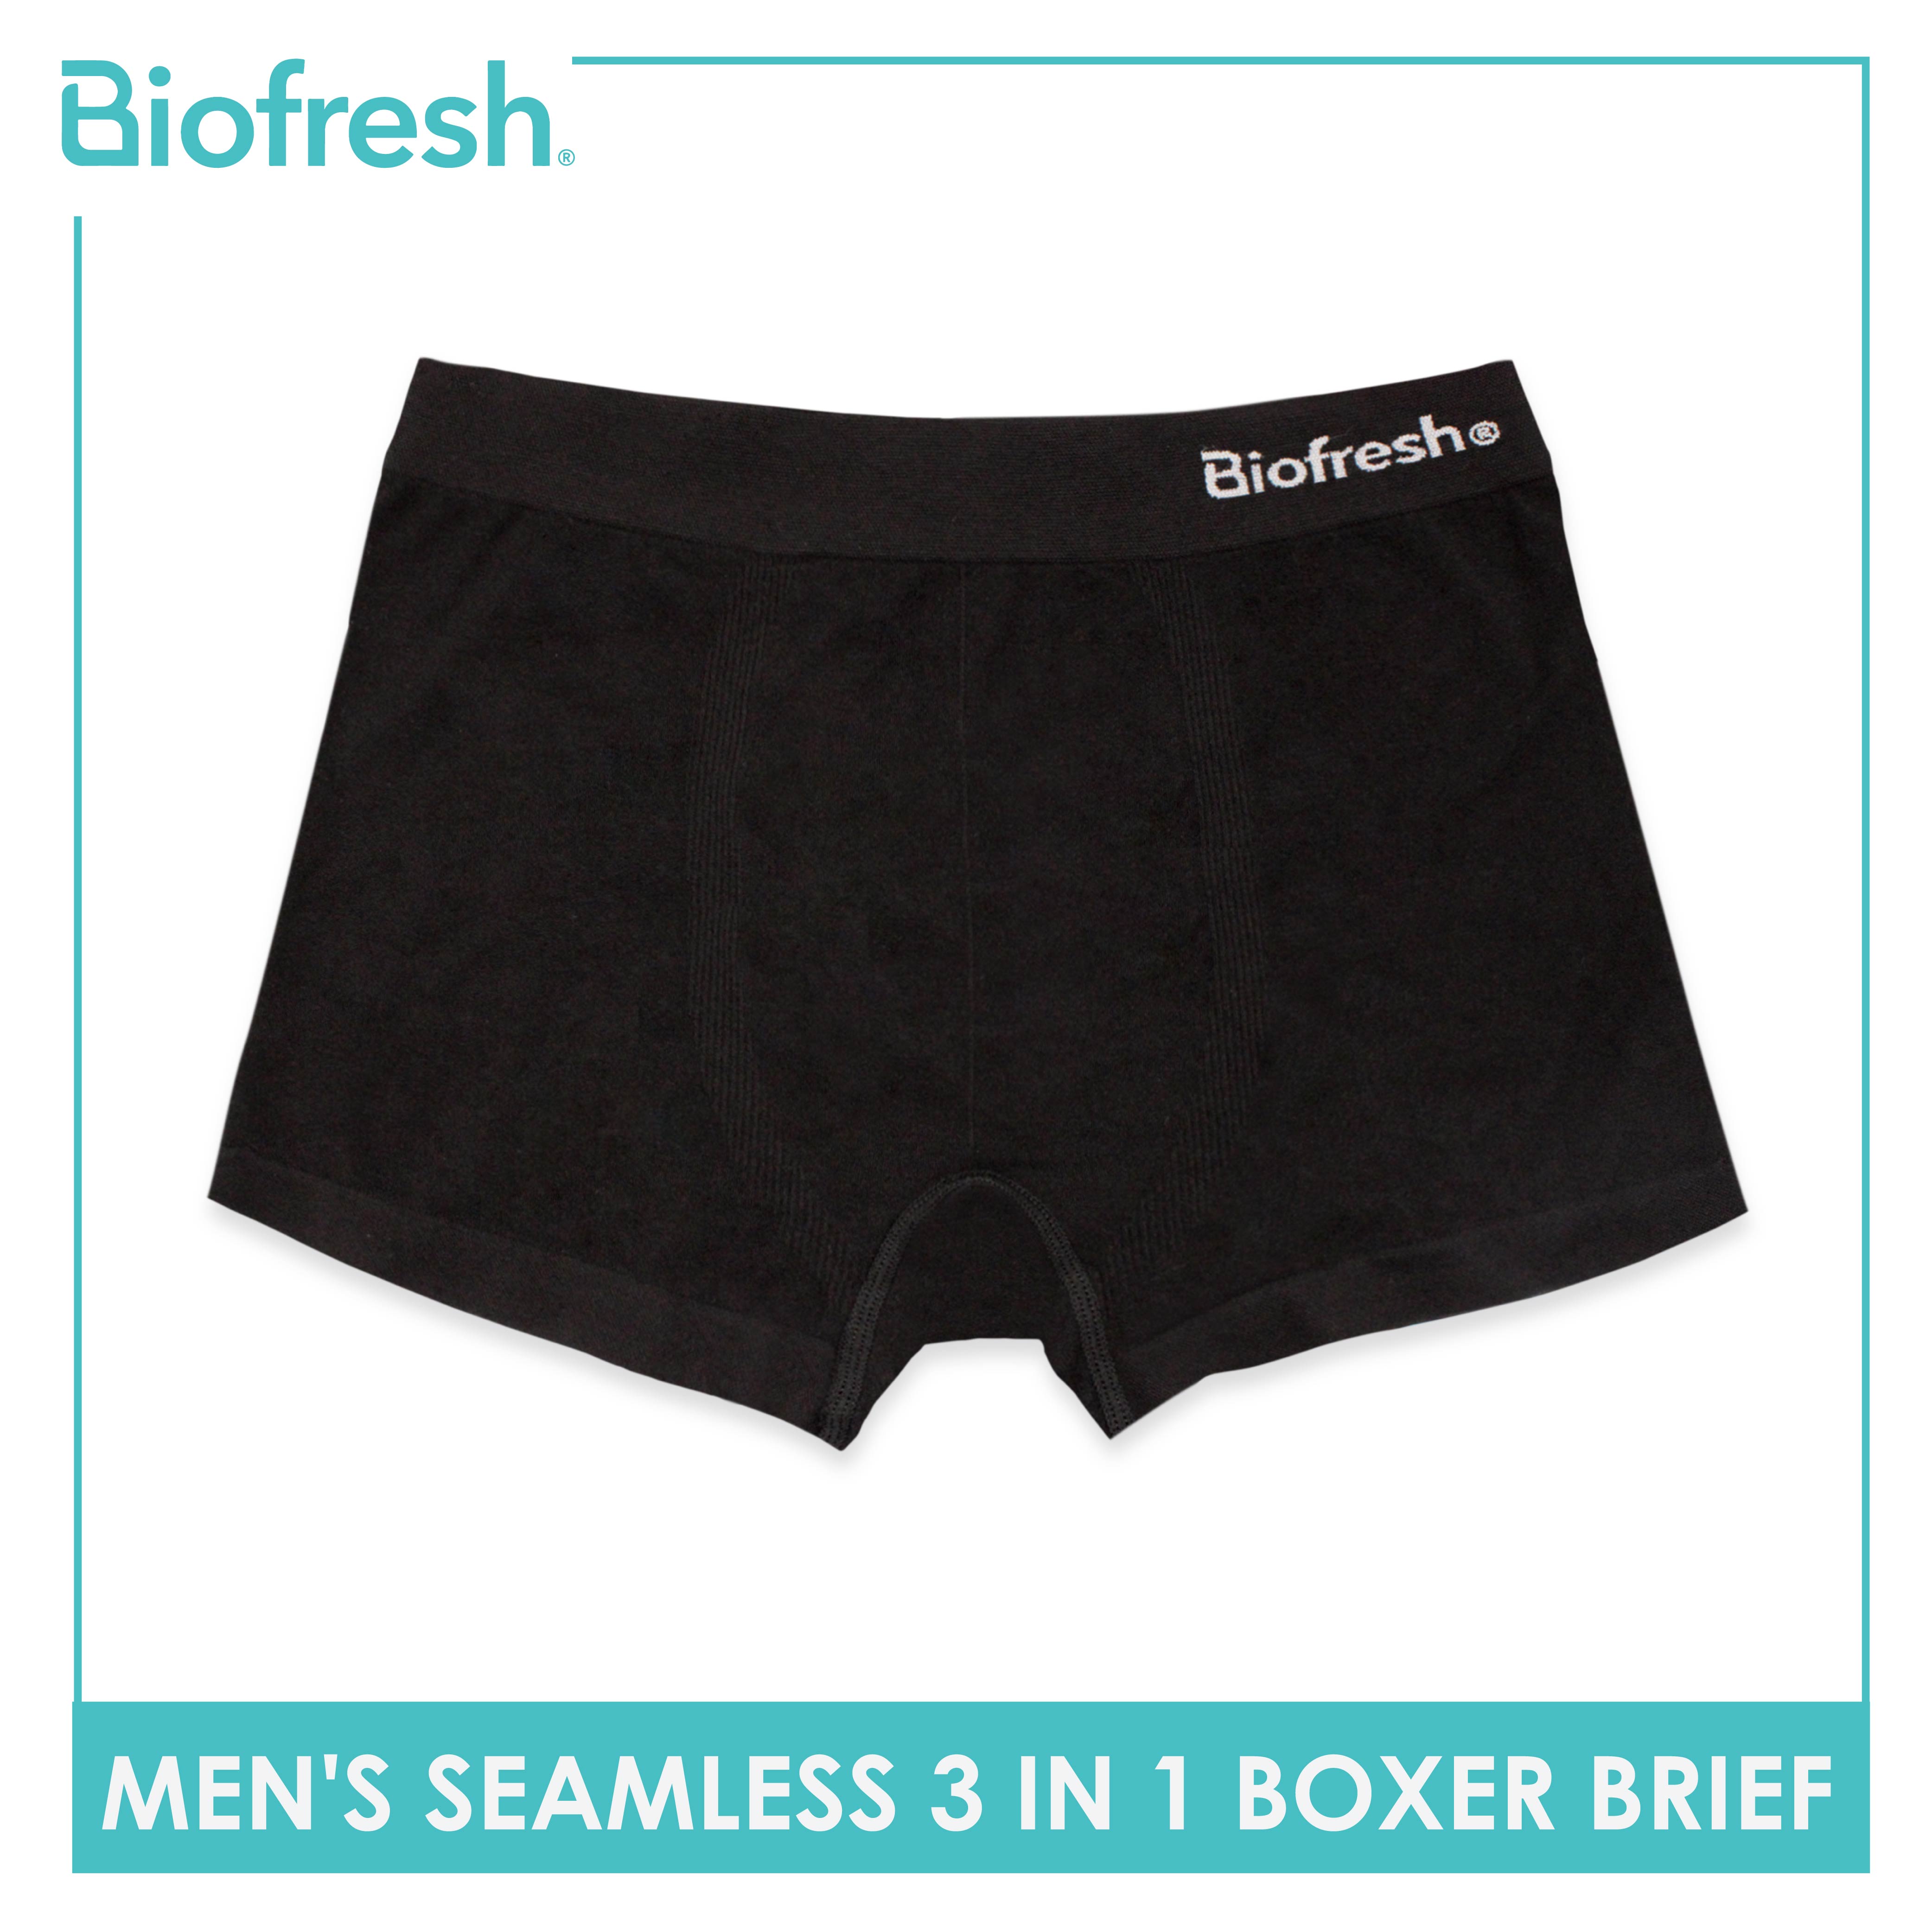 Biofresh Men's OVERRUNS Cotton Breathable Boxer Brief 5 pieces in